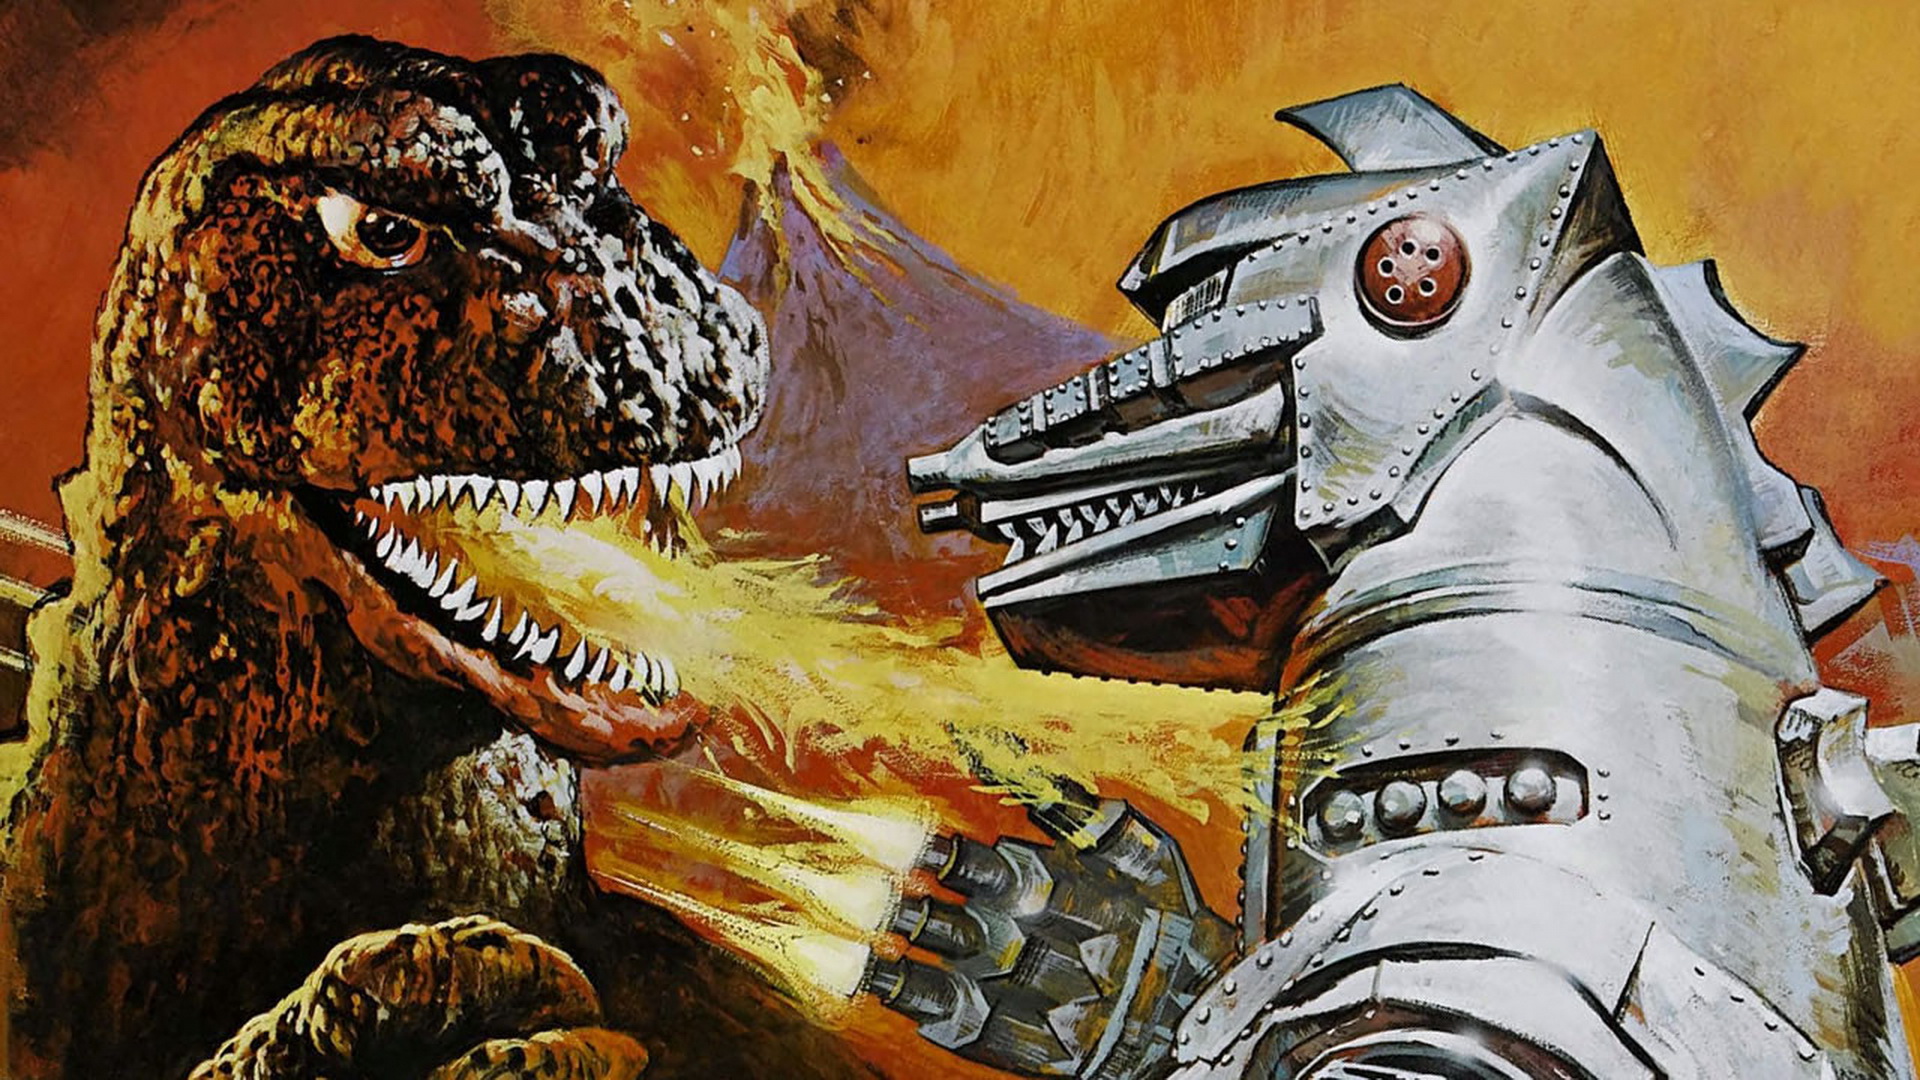 Godzilla Vs. Mechagodzilla Computer Wallpapers, Desktop Backgrounds | 1920x1080 | ID ...1920 x 1080